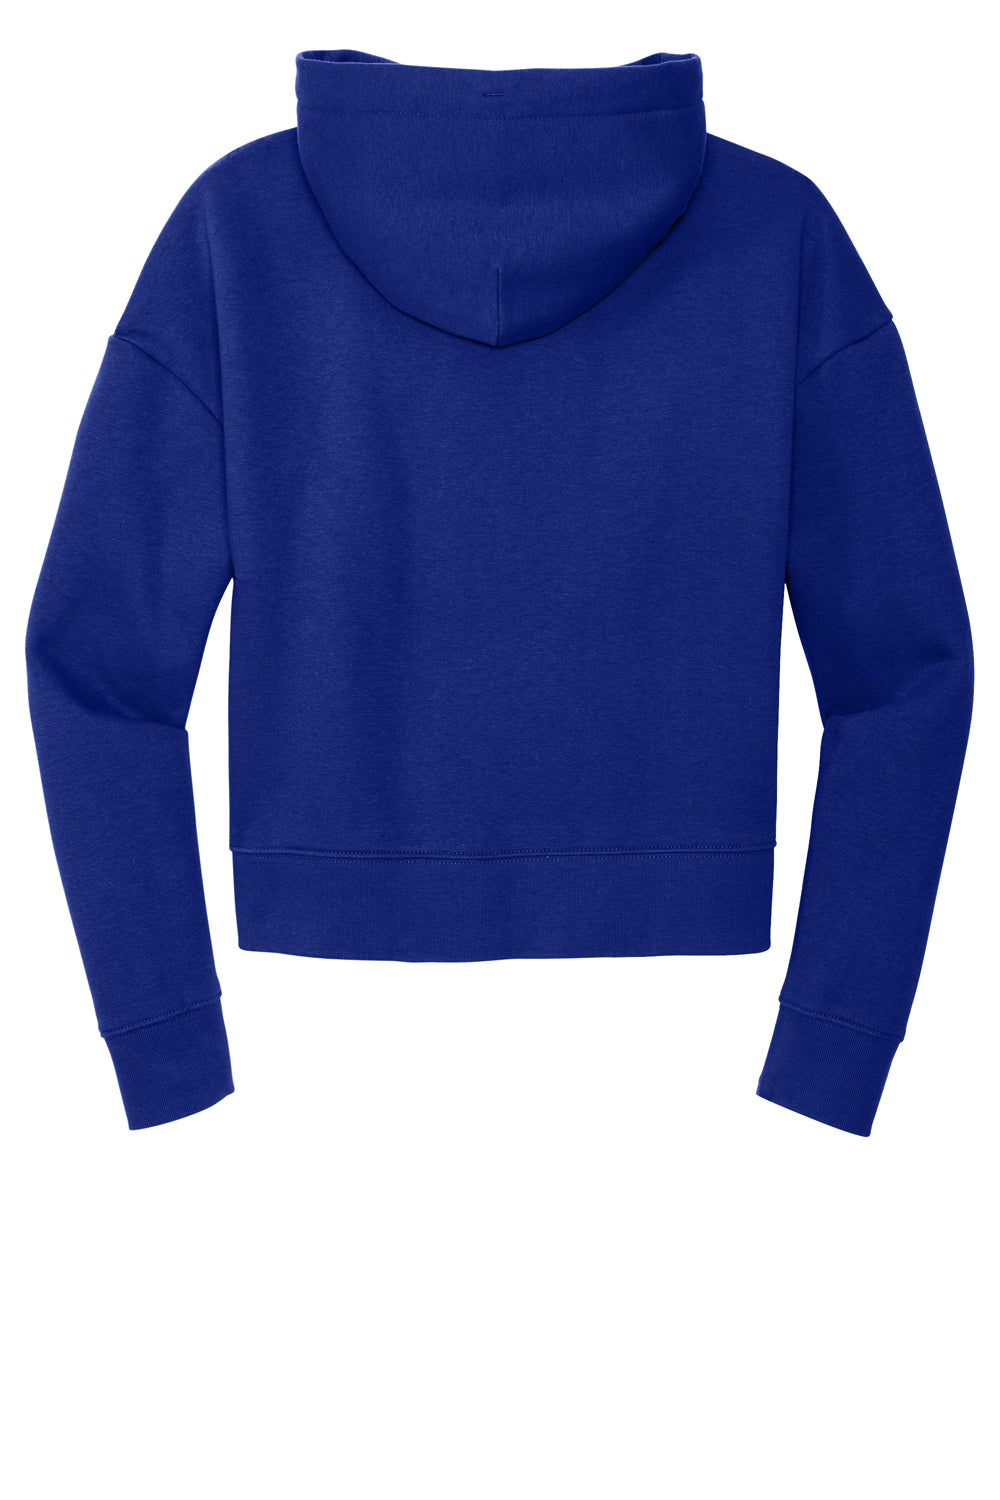 District DT6101 V.I.T. Fleece Hooded Sweatshirt Hoodie Deep Royal Blue Flat Back